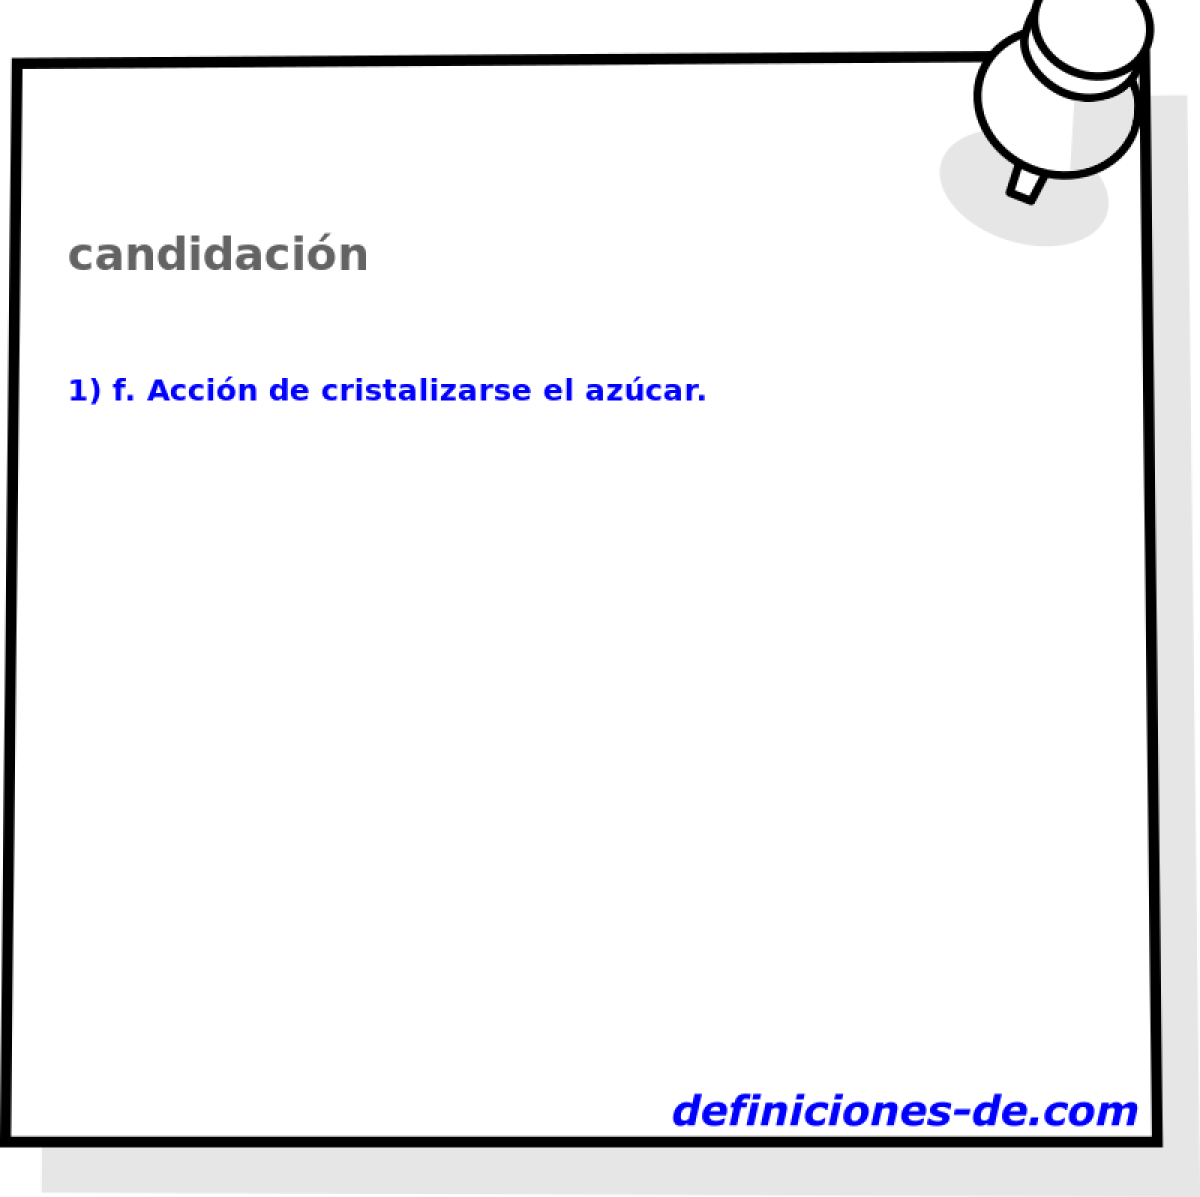 candidacin 